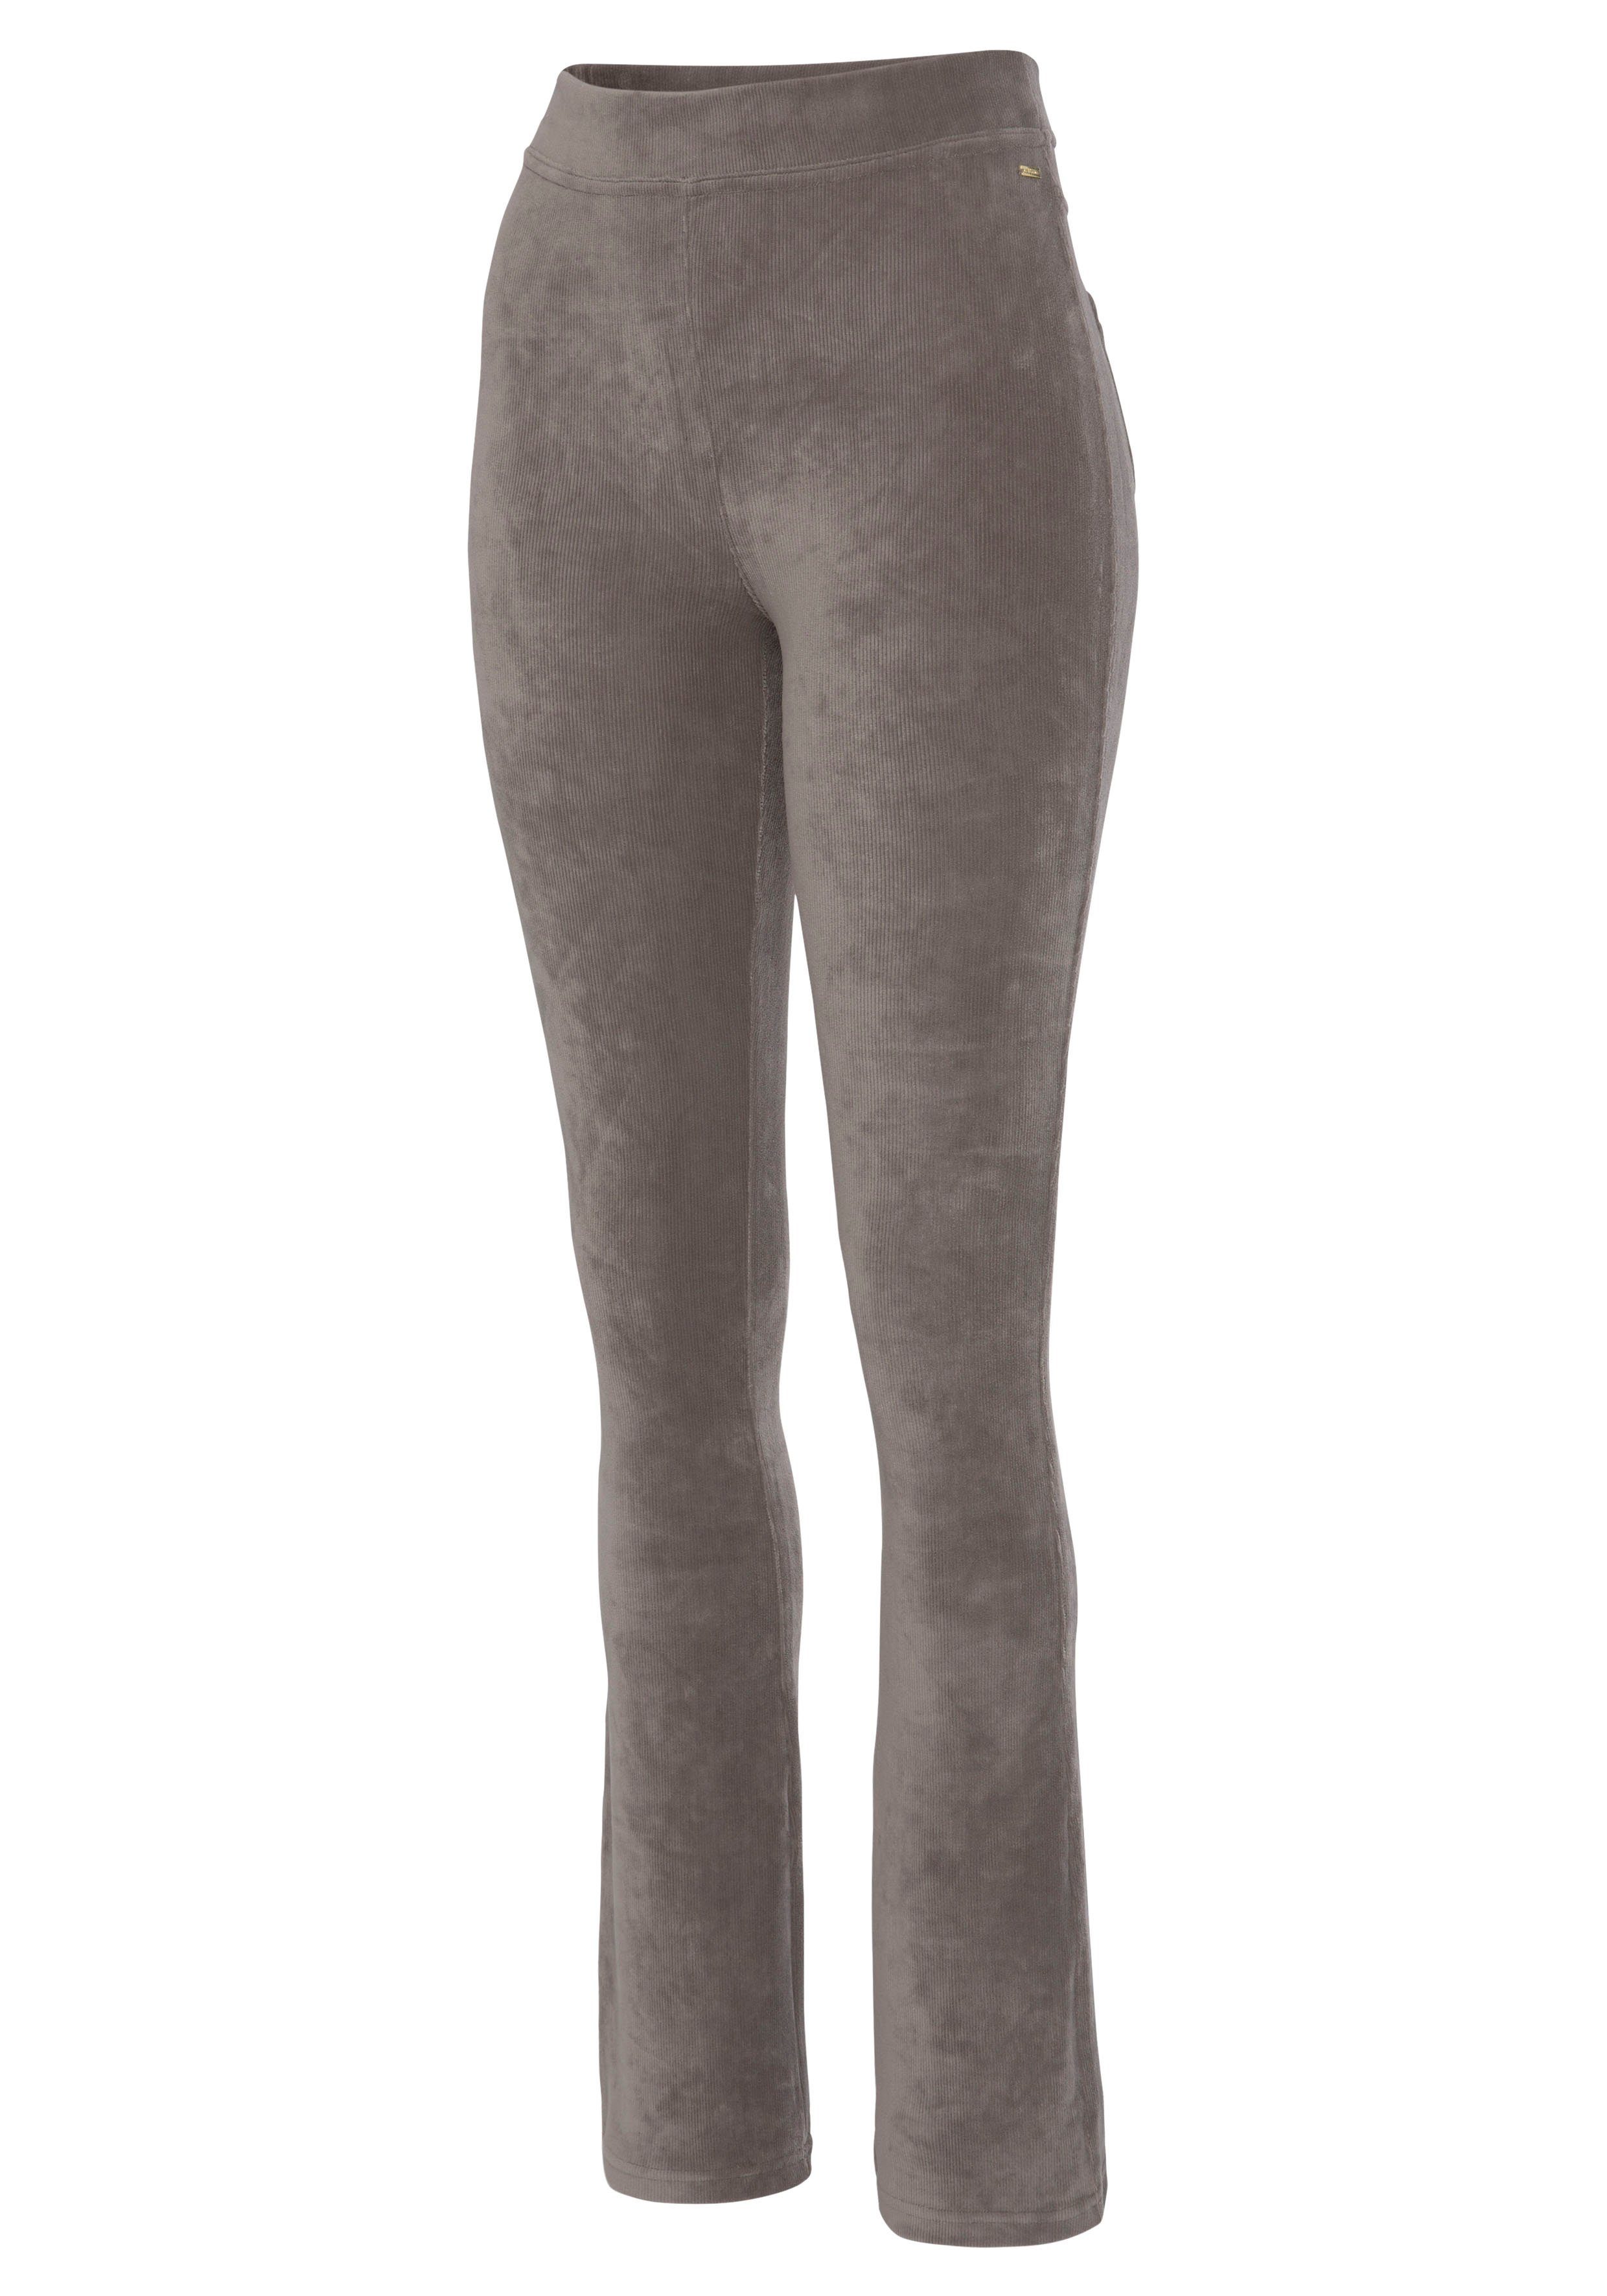 LASCANA Jazzpants aus Material in stone weichem Cord-Optik, Loungewear